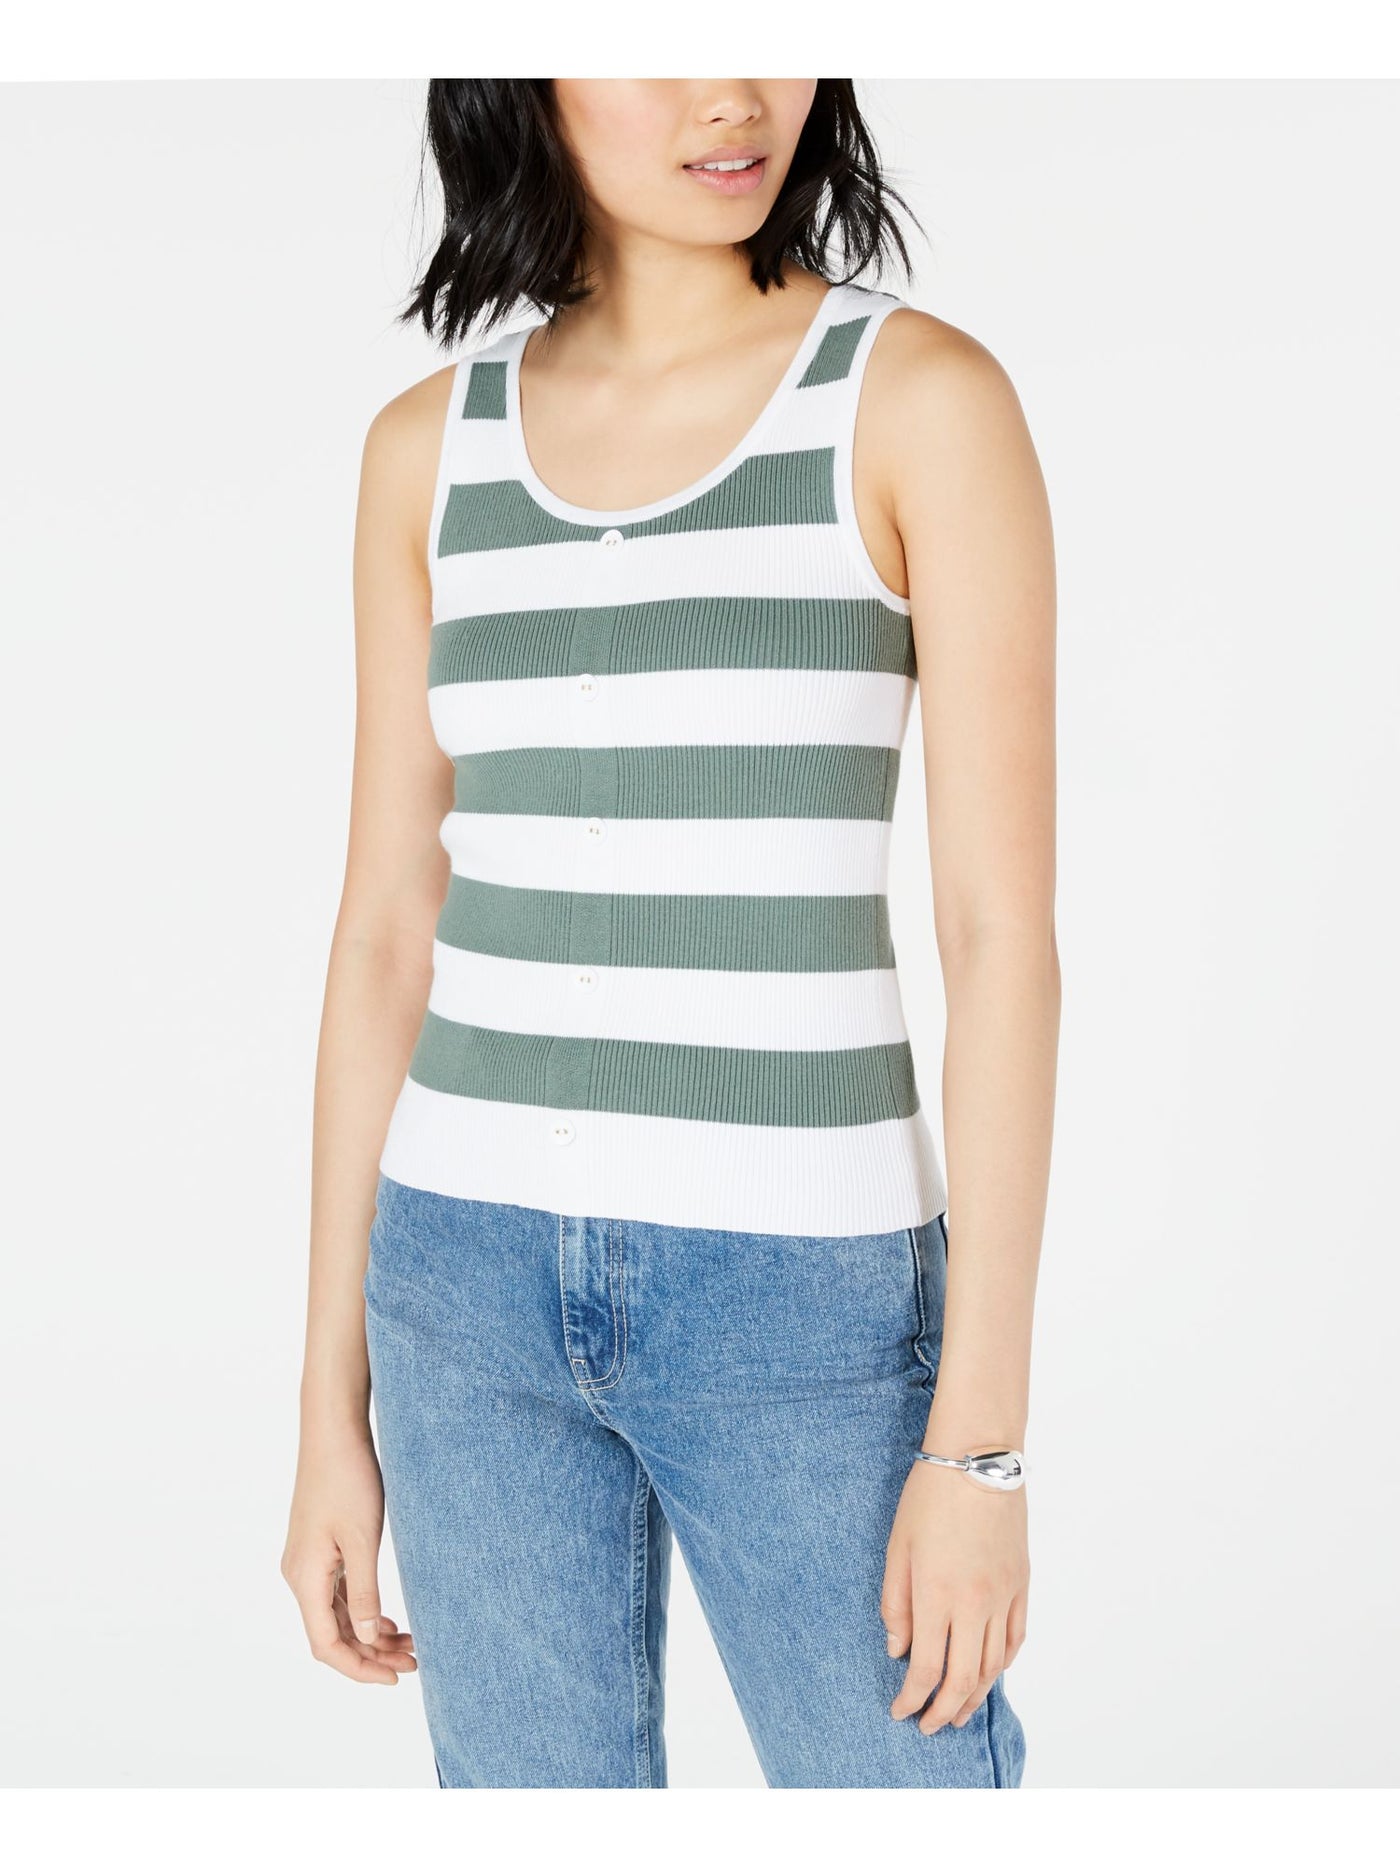 MAISON JULES Womens Green Striped Sleeveless Scoop Neck Top Size: XL